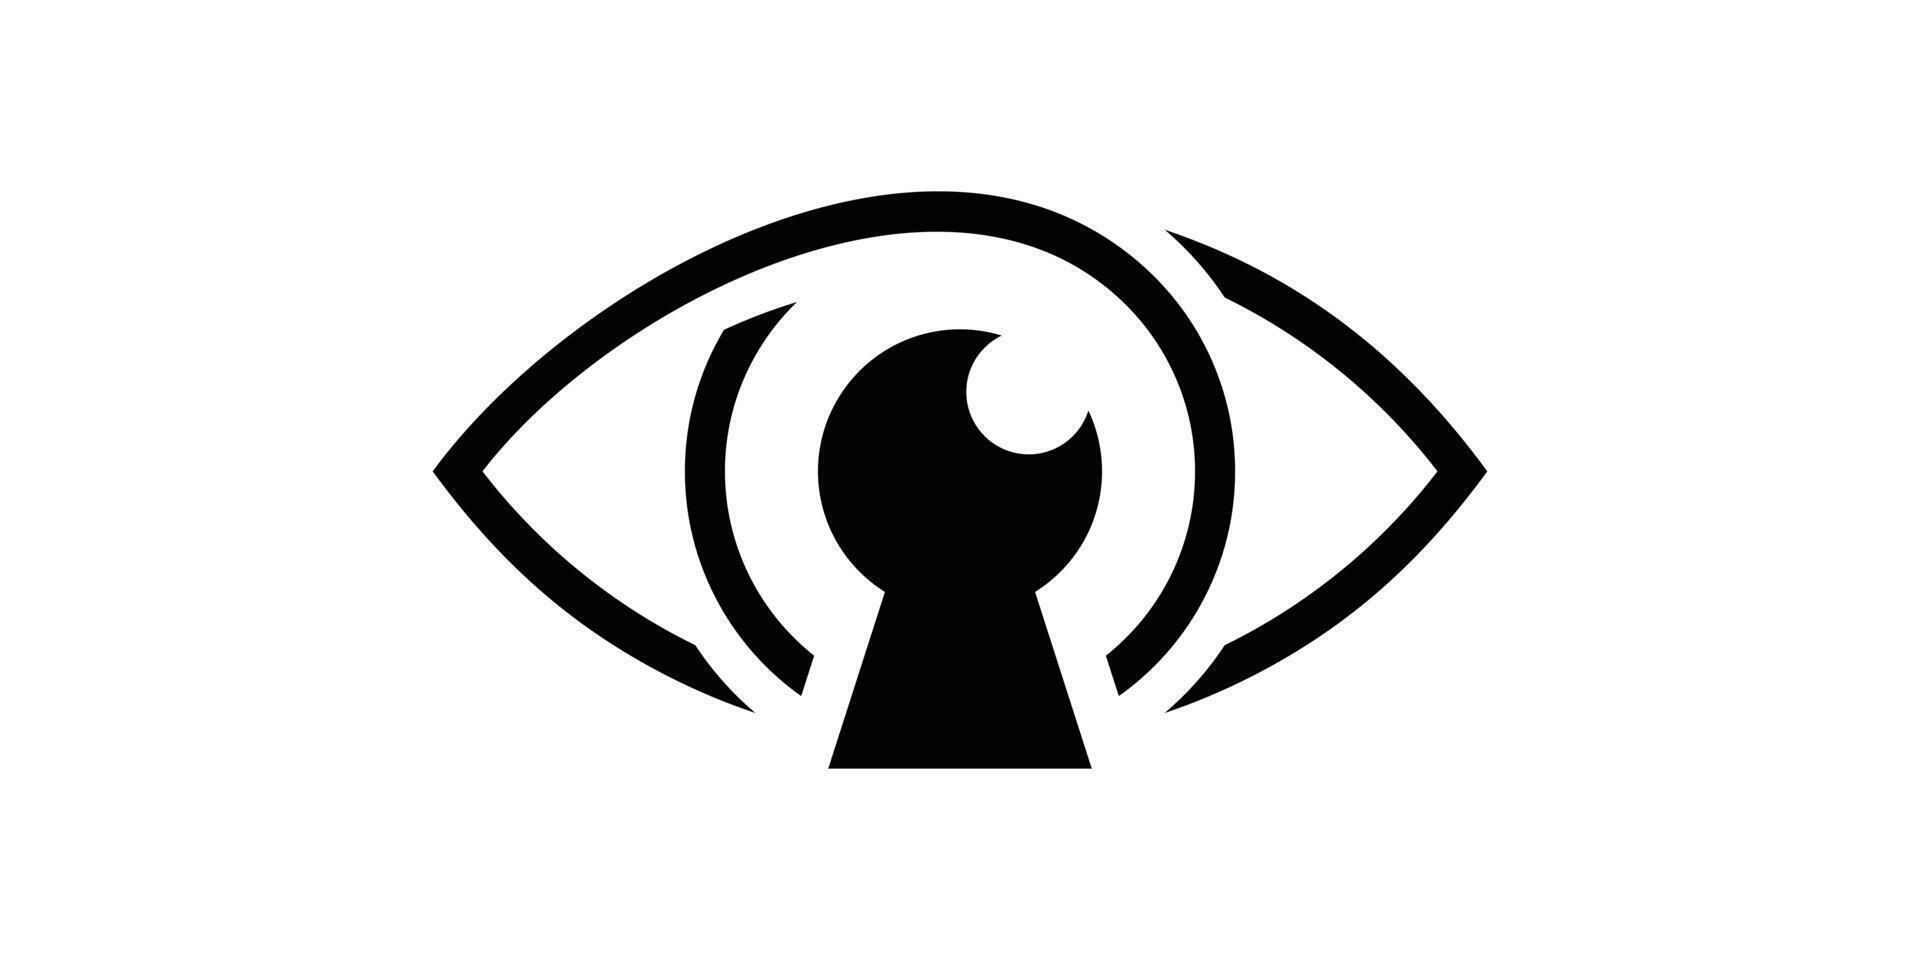 eye key logo design, eye safety, eye health, logo design templates, symbols, creative ideas. vector